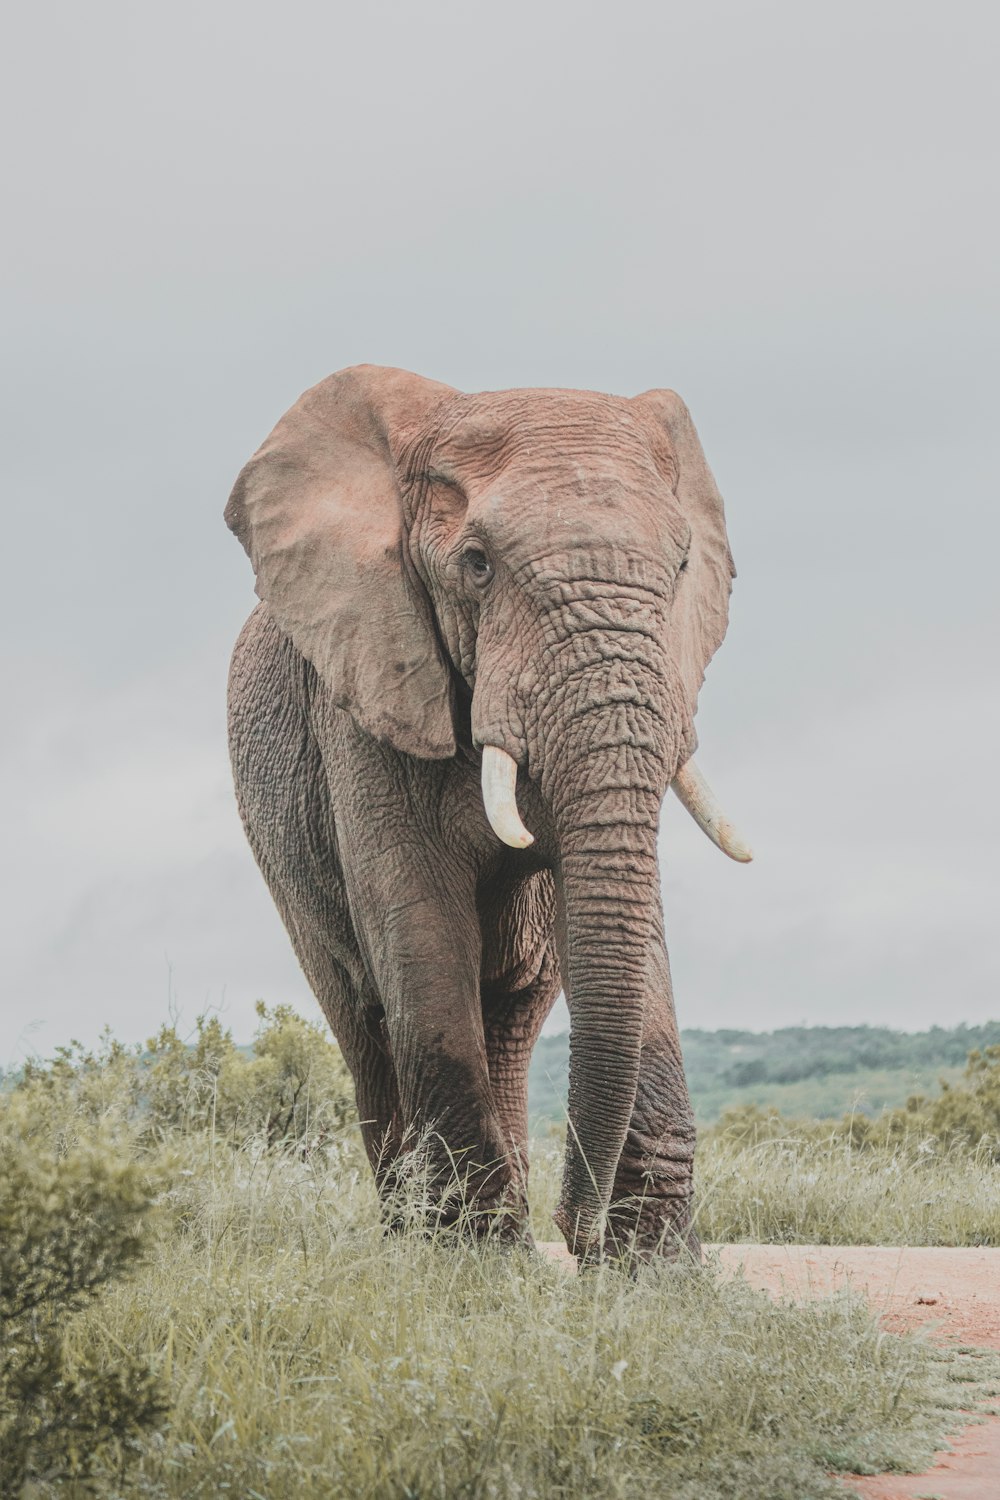 a large elephant walking through a lush green field